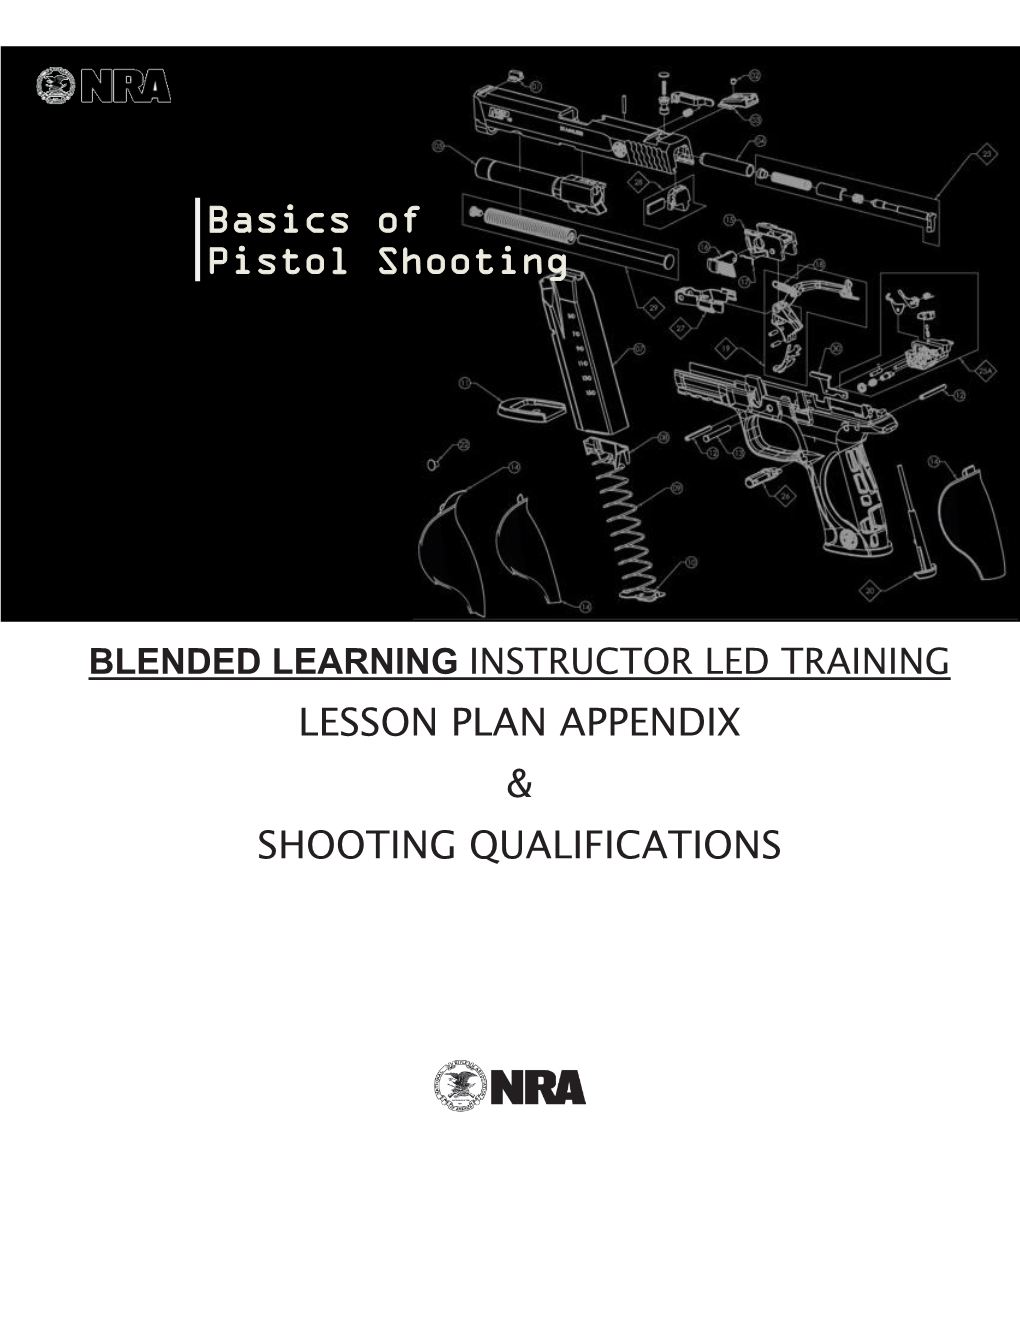 Basics of Pistol Shooting Blended Course